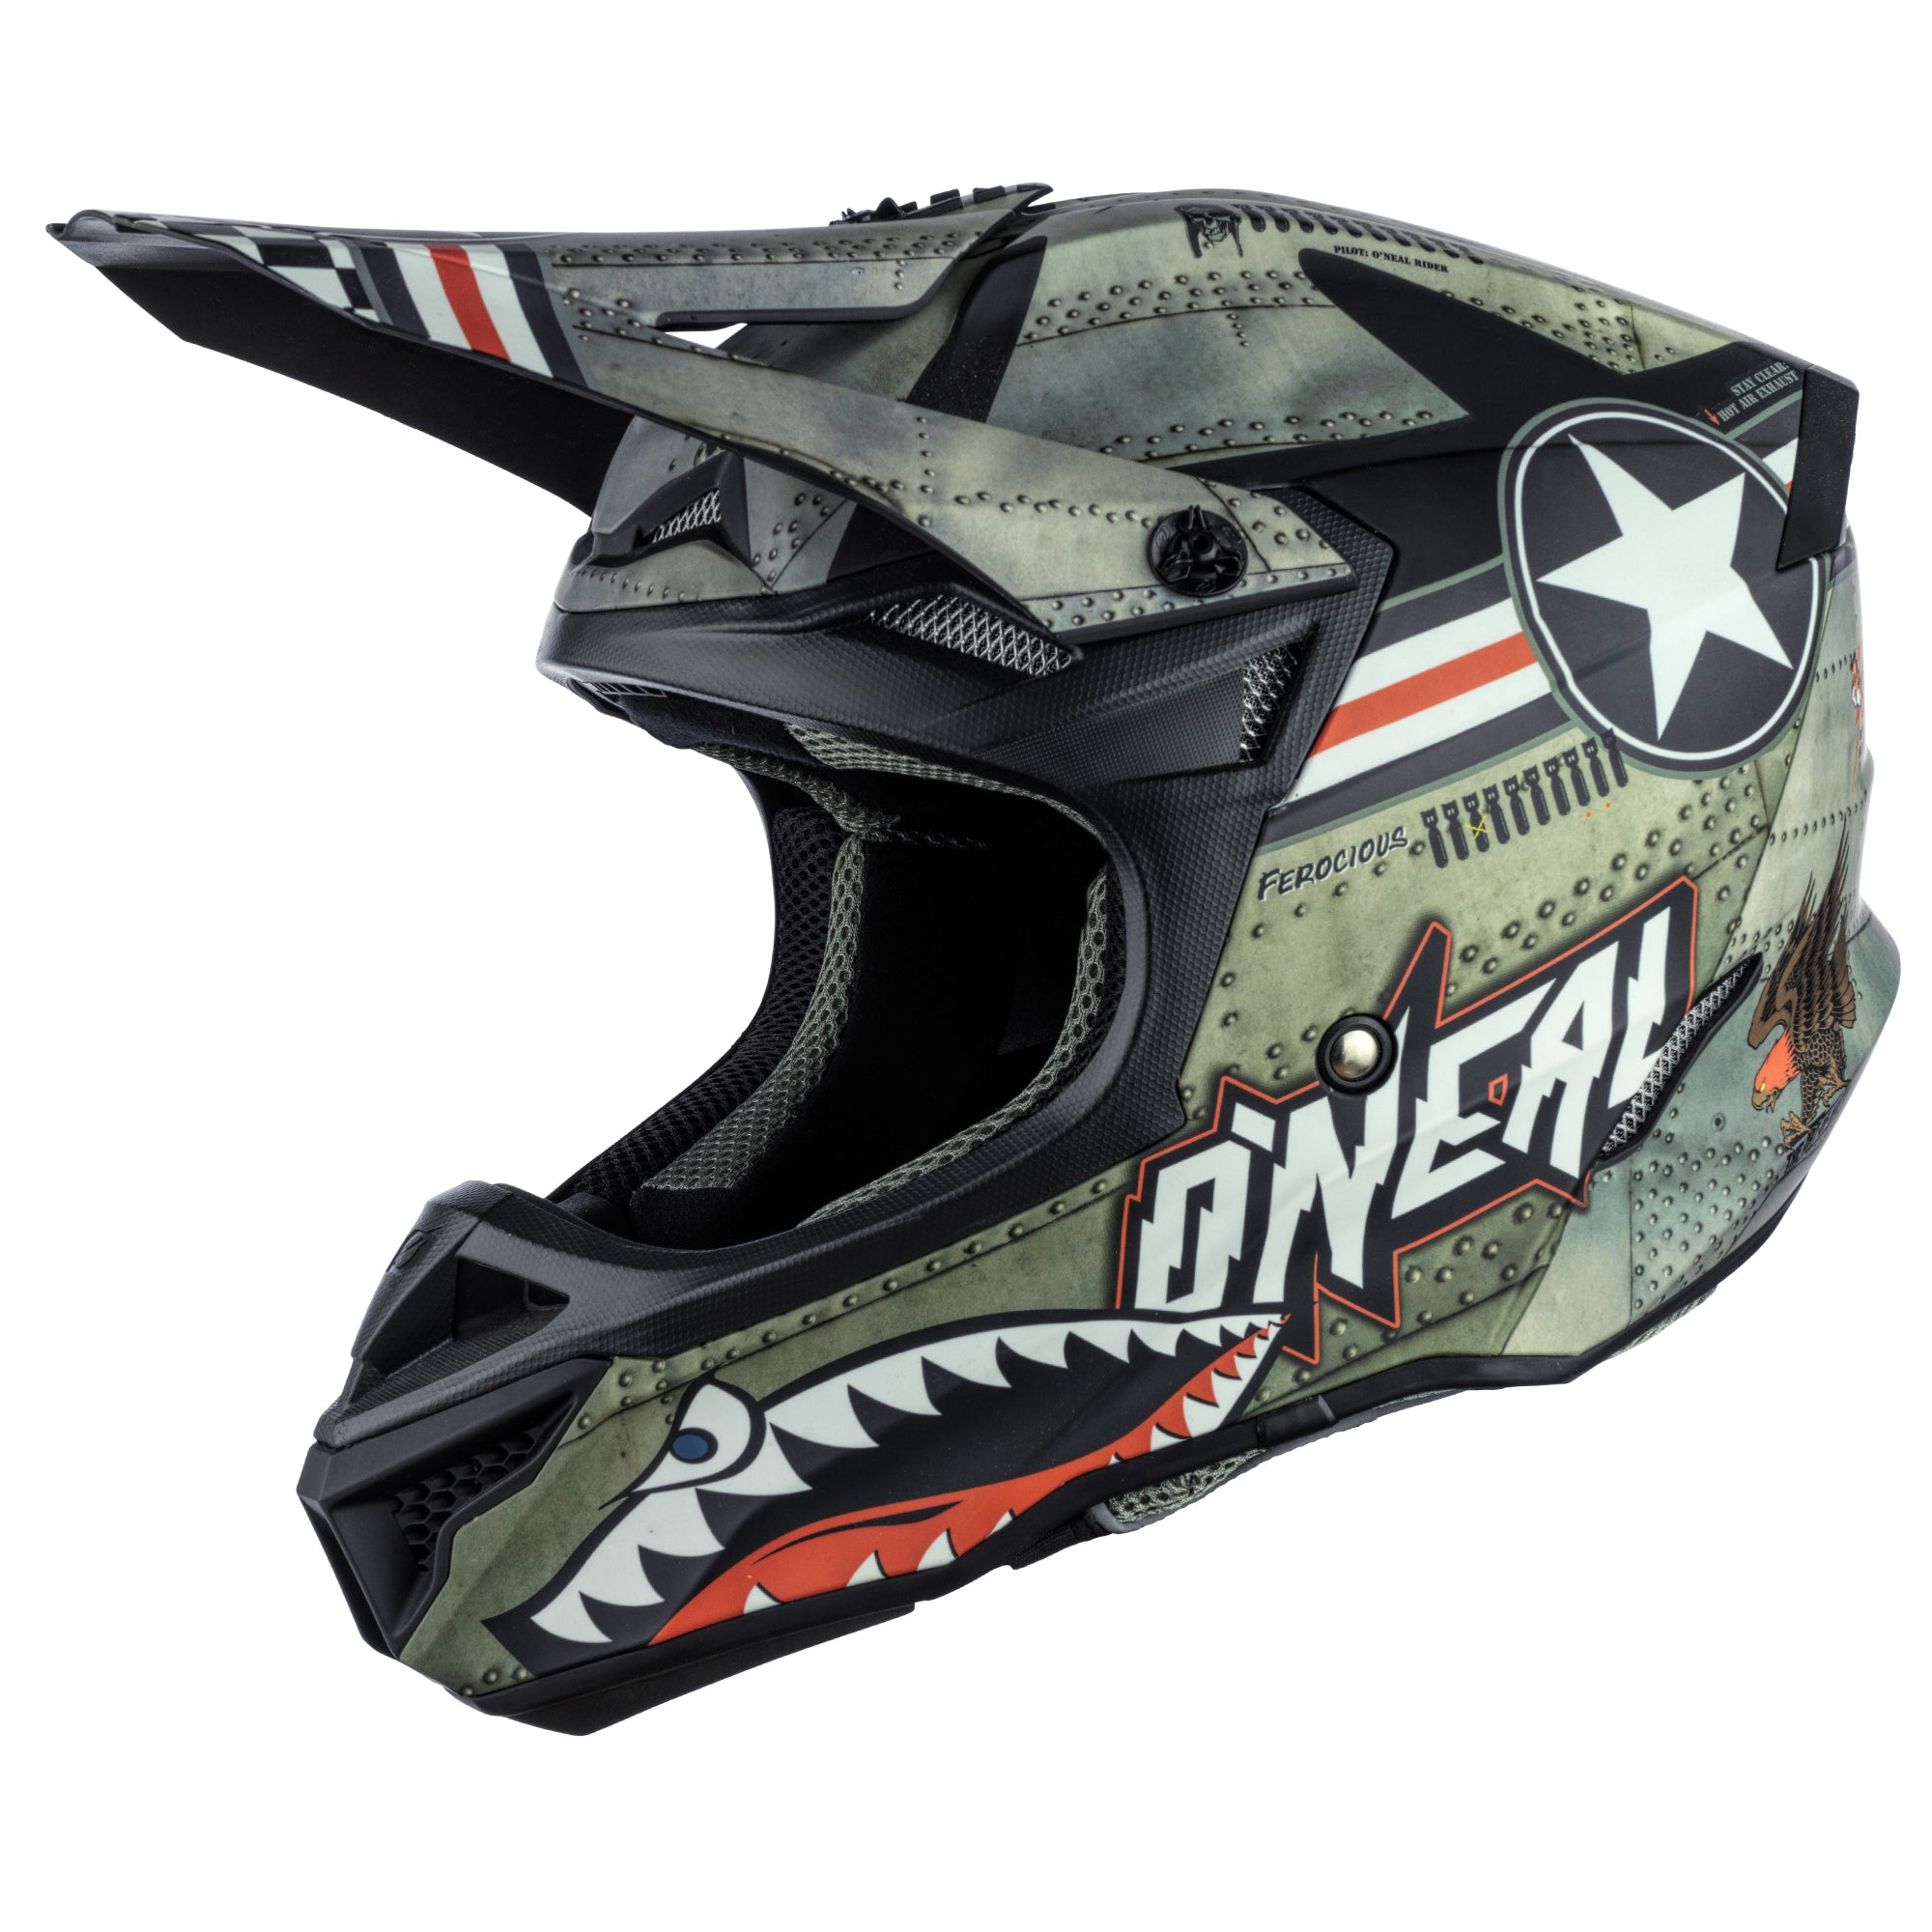 Casco Motocross Enduro Oneal 2 Series Solid Flat Negro Mate